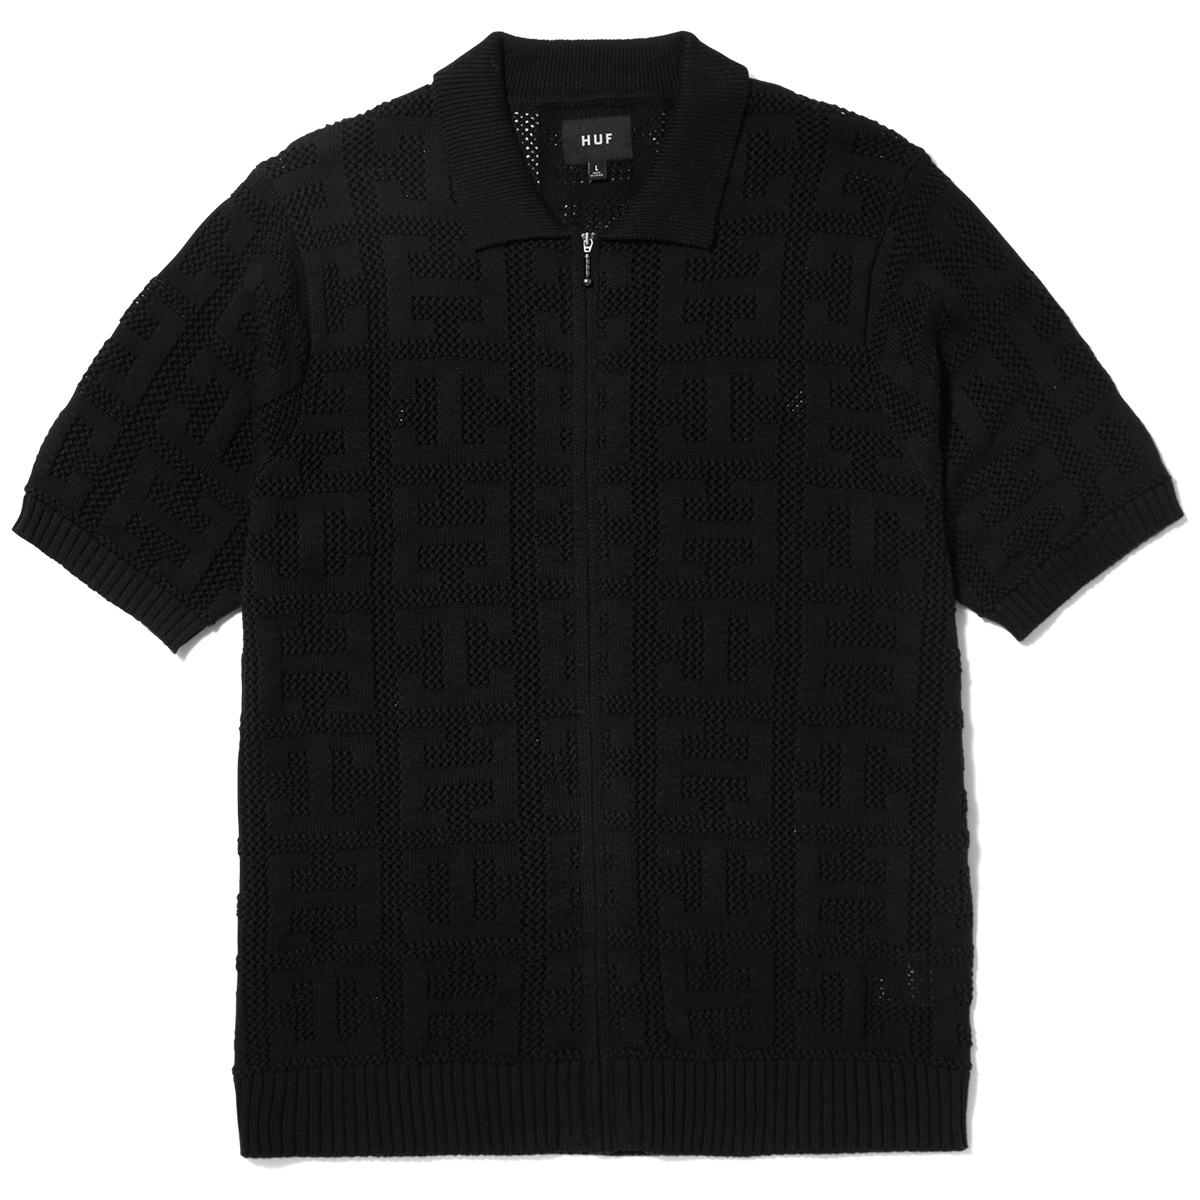 HUF Monogram Jacquard Zip Sweater Black